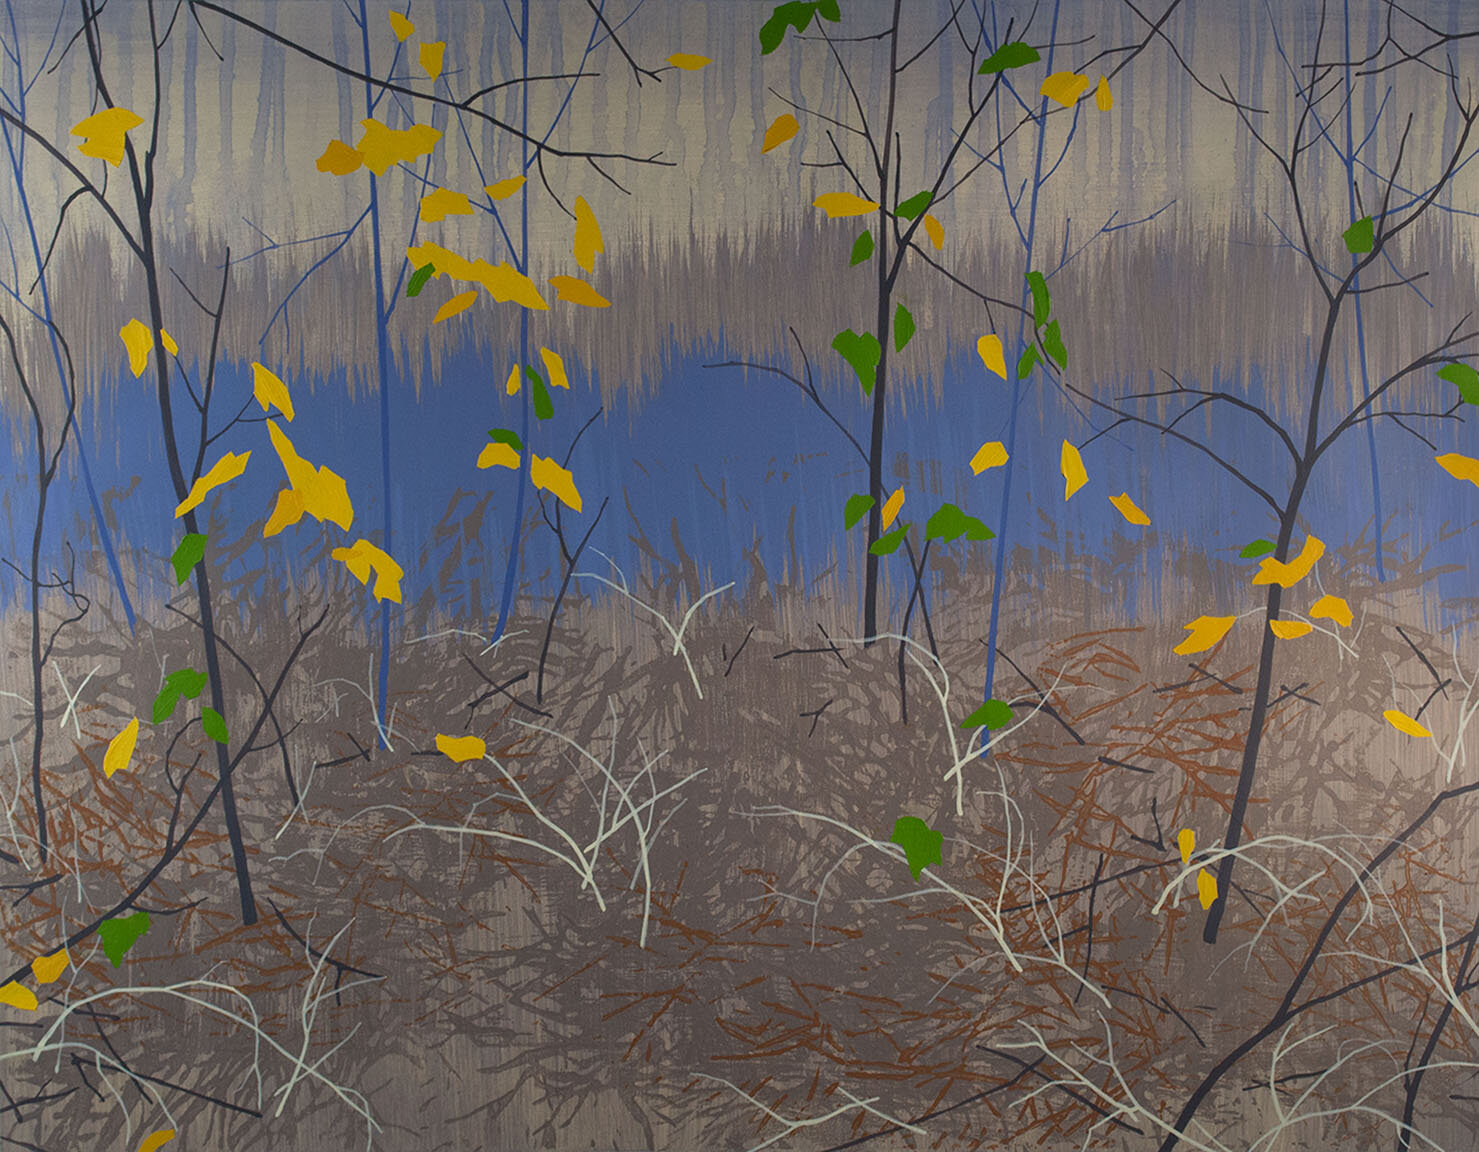   Wetland 80   Acrylic on paper, 19 x 24”  SOLD  